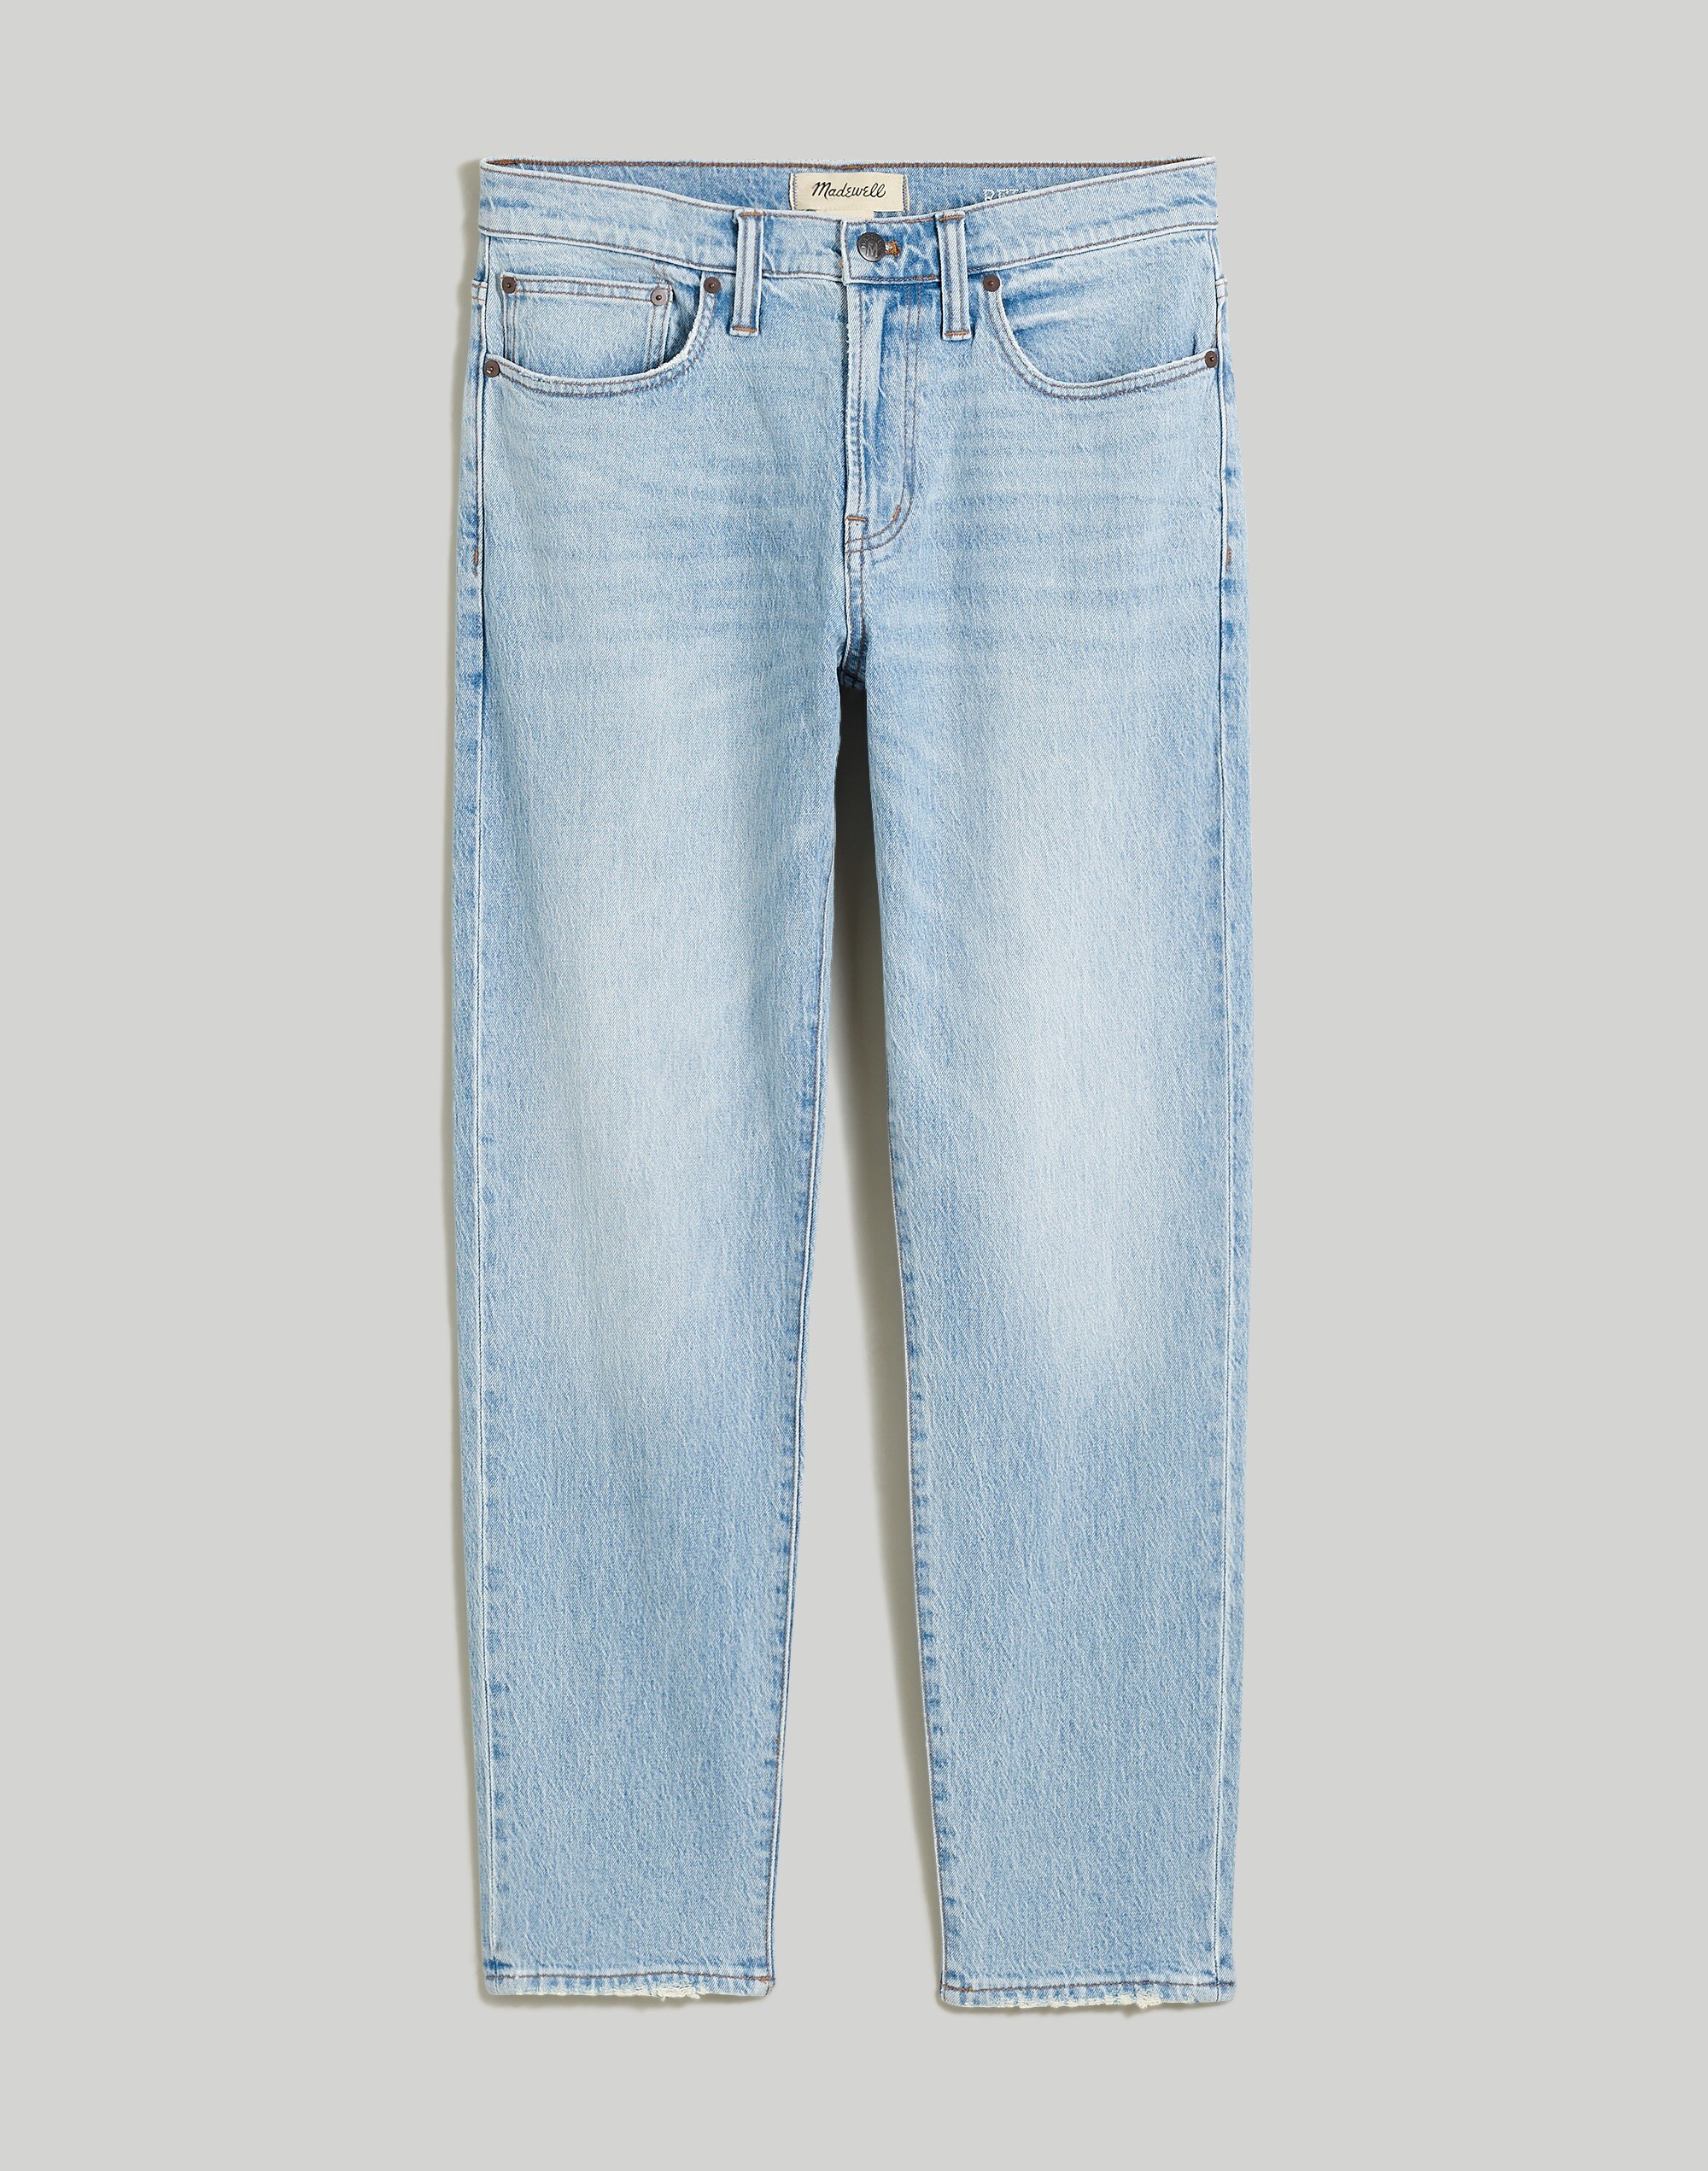 Madewell Men's Slim Jeans in Stratfield Wash - Size 33/30